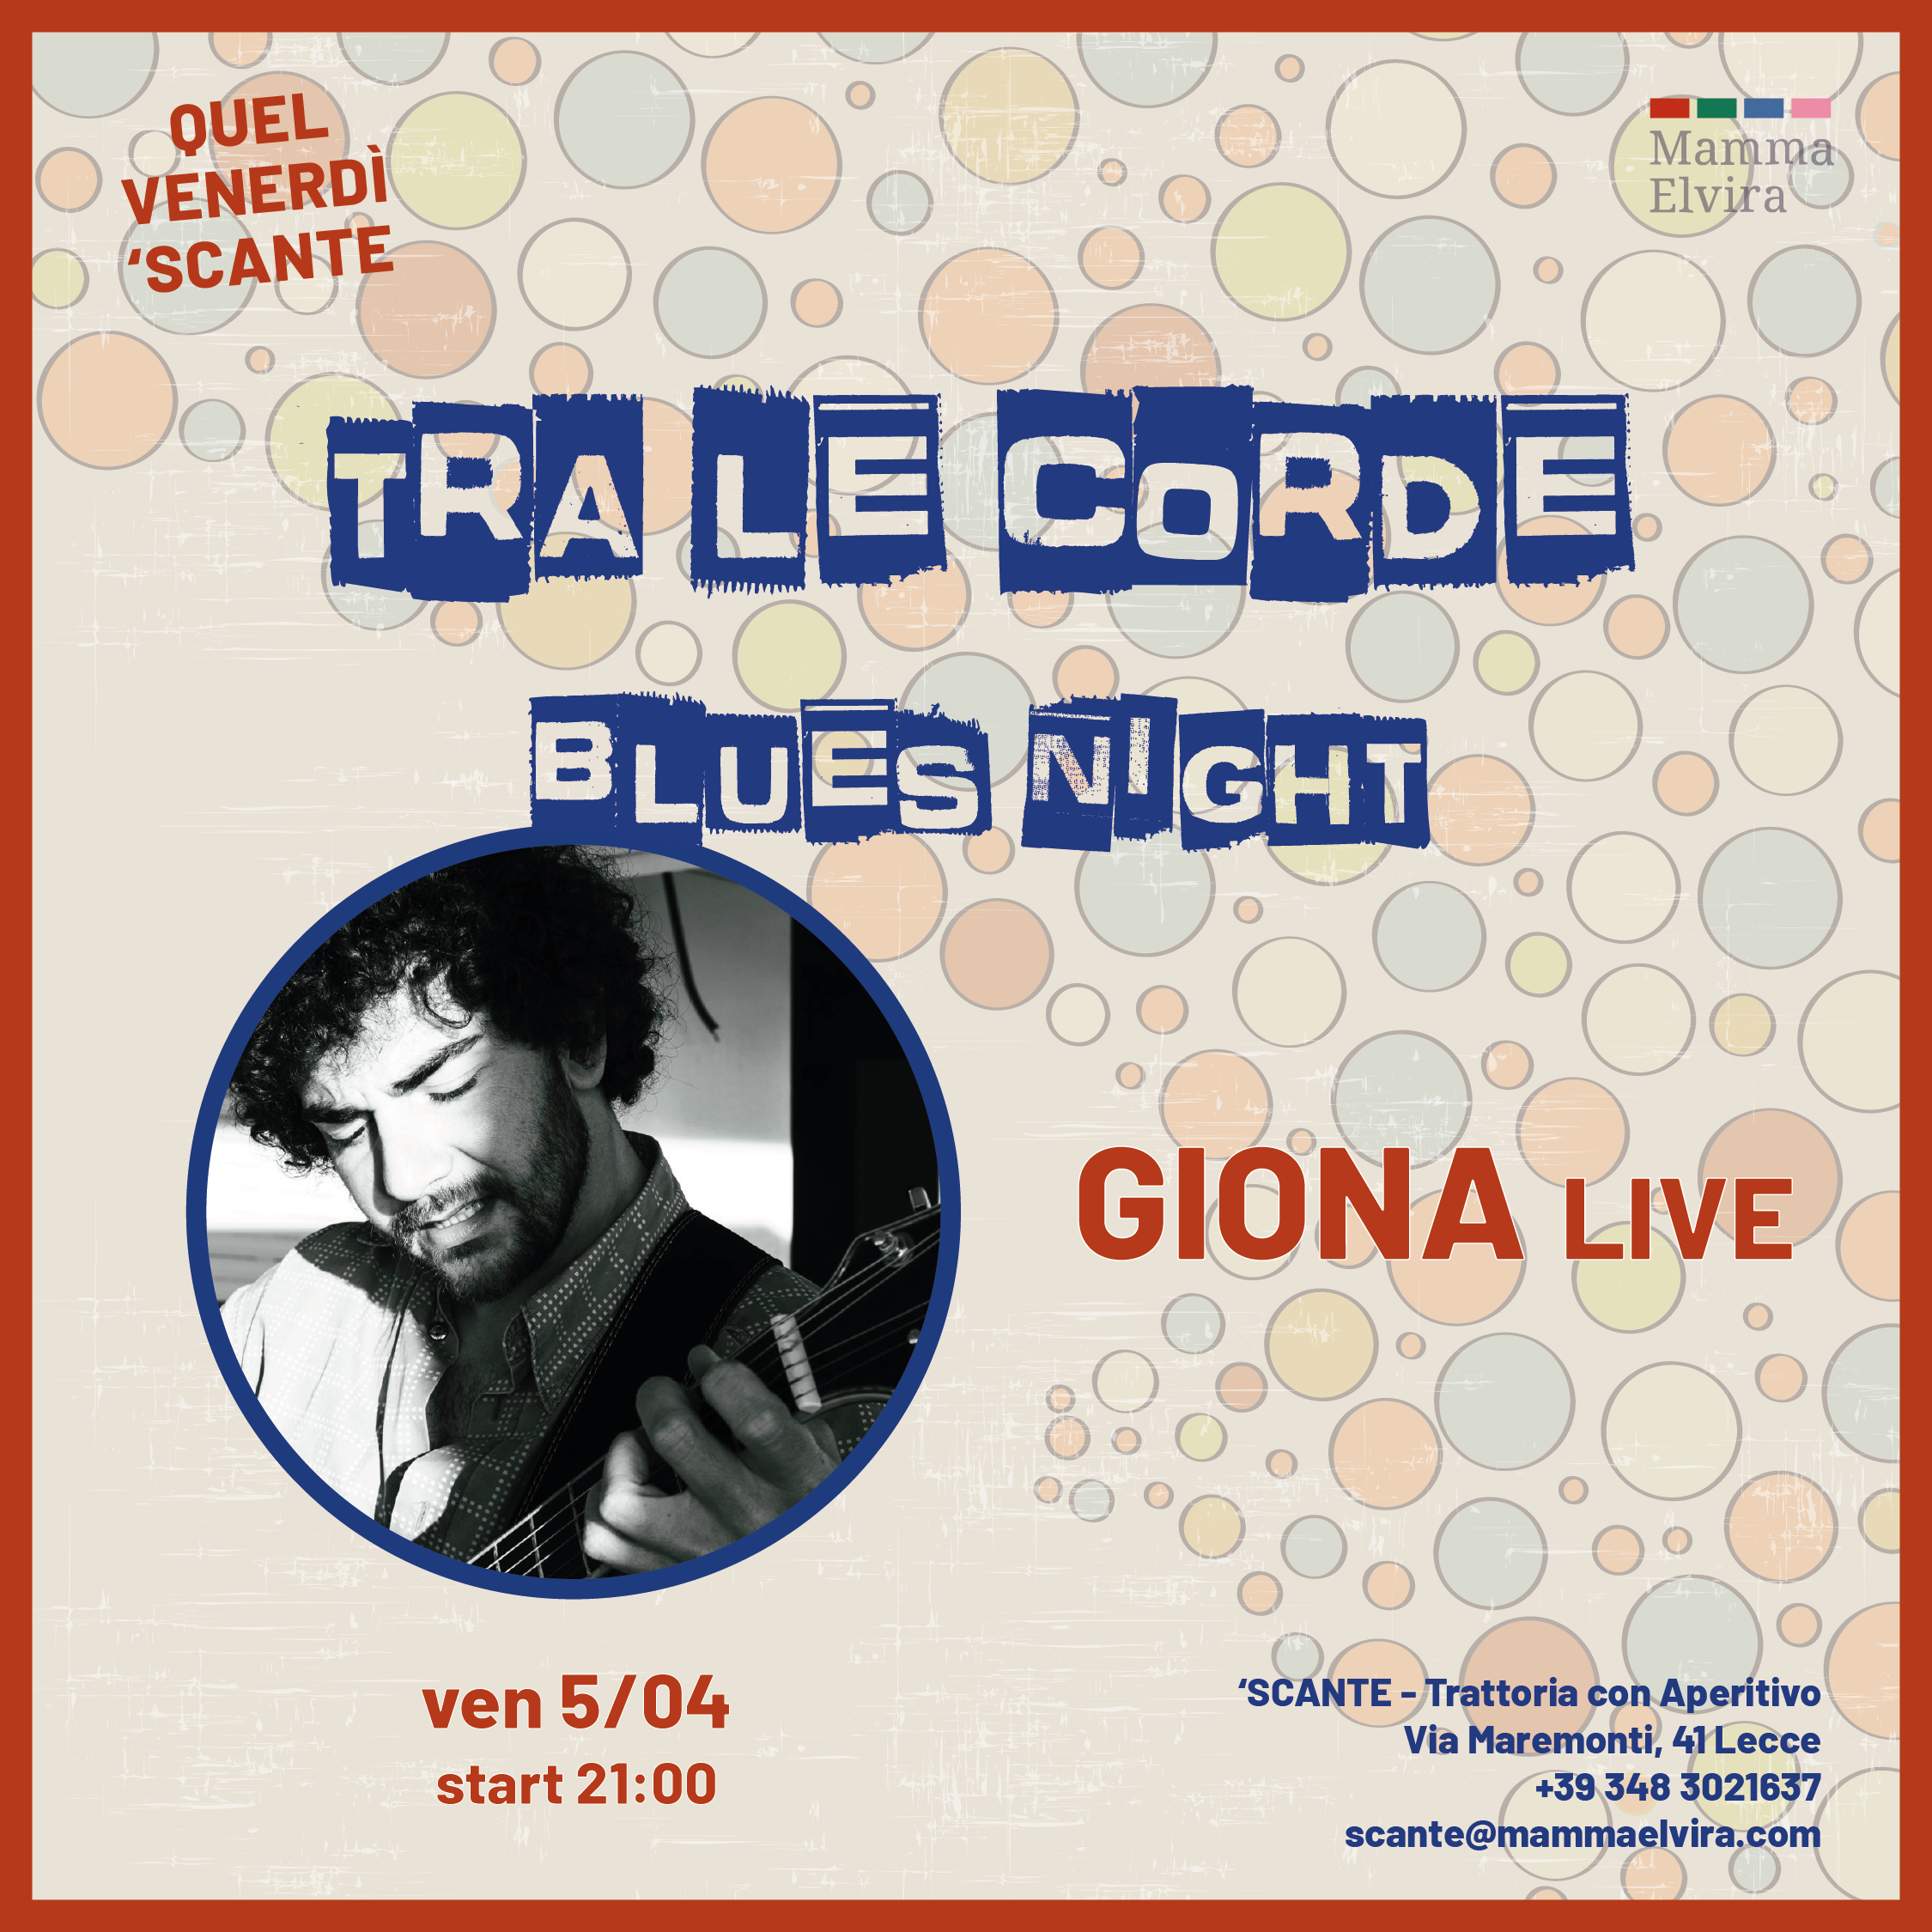 Tra le Corde, Blues Night cover image